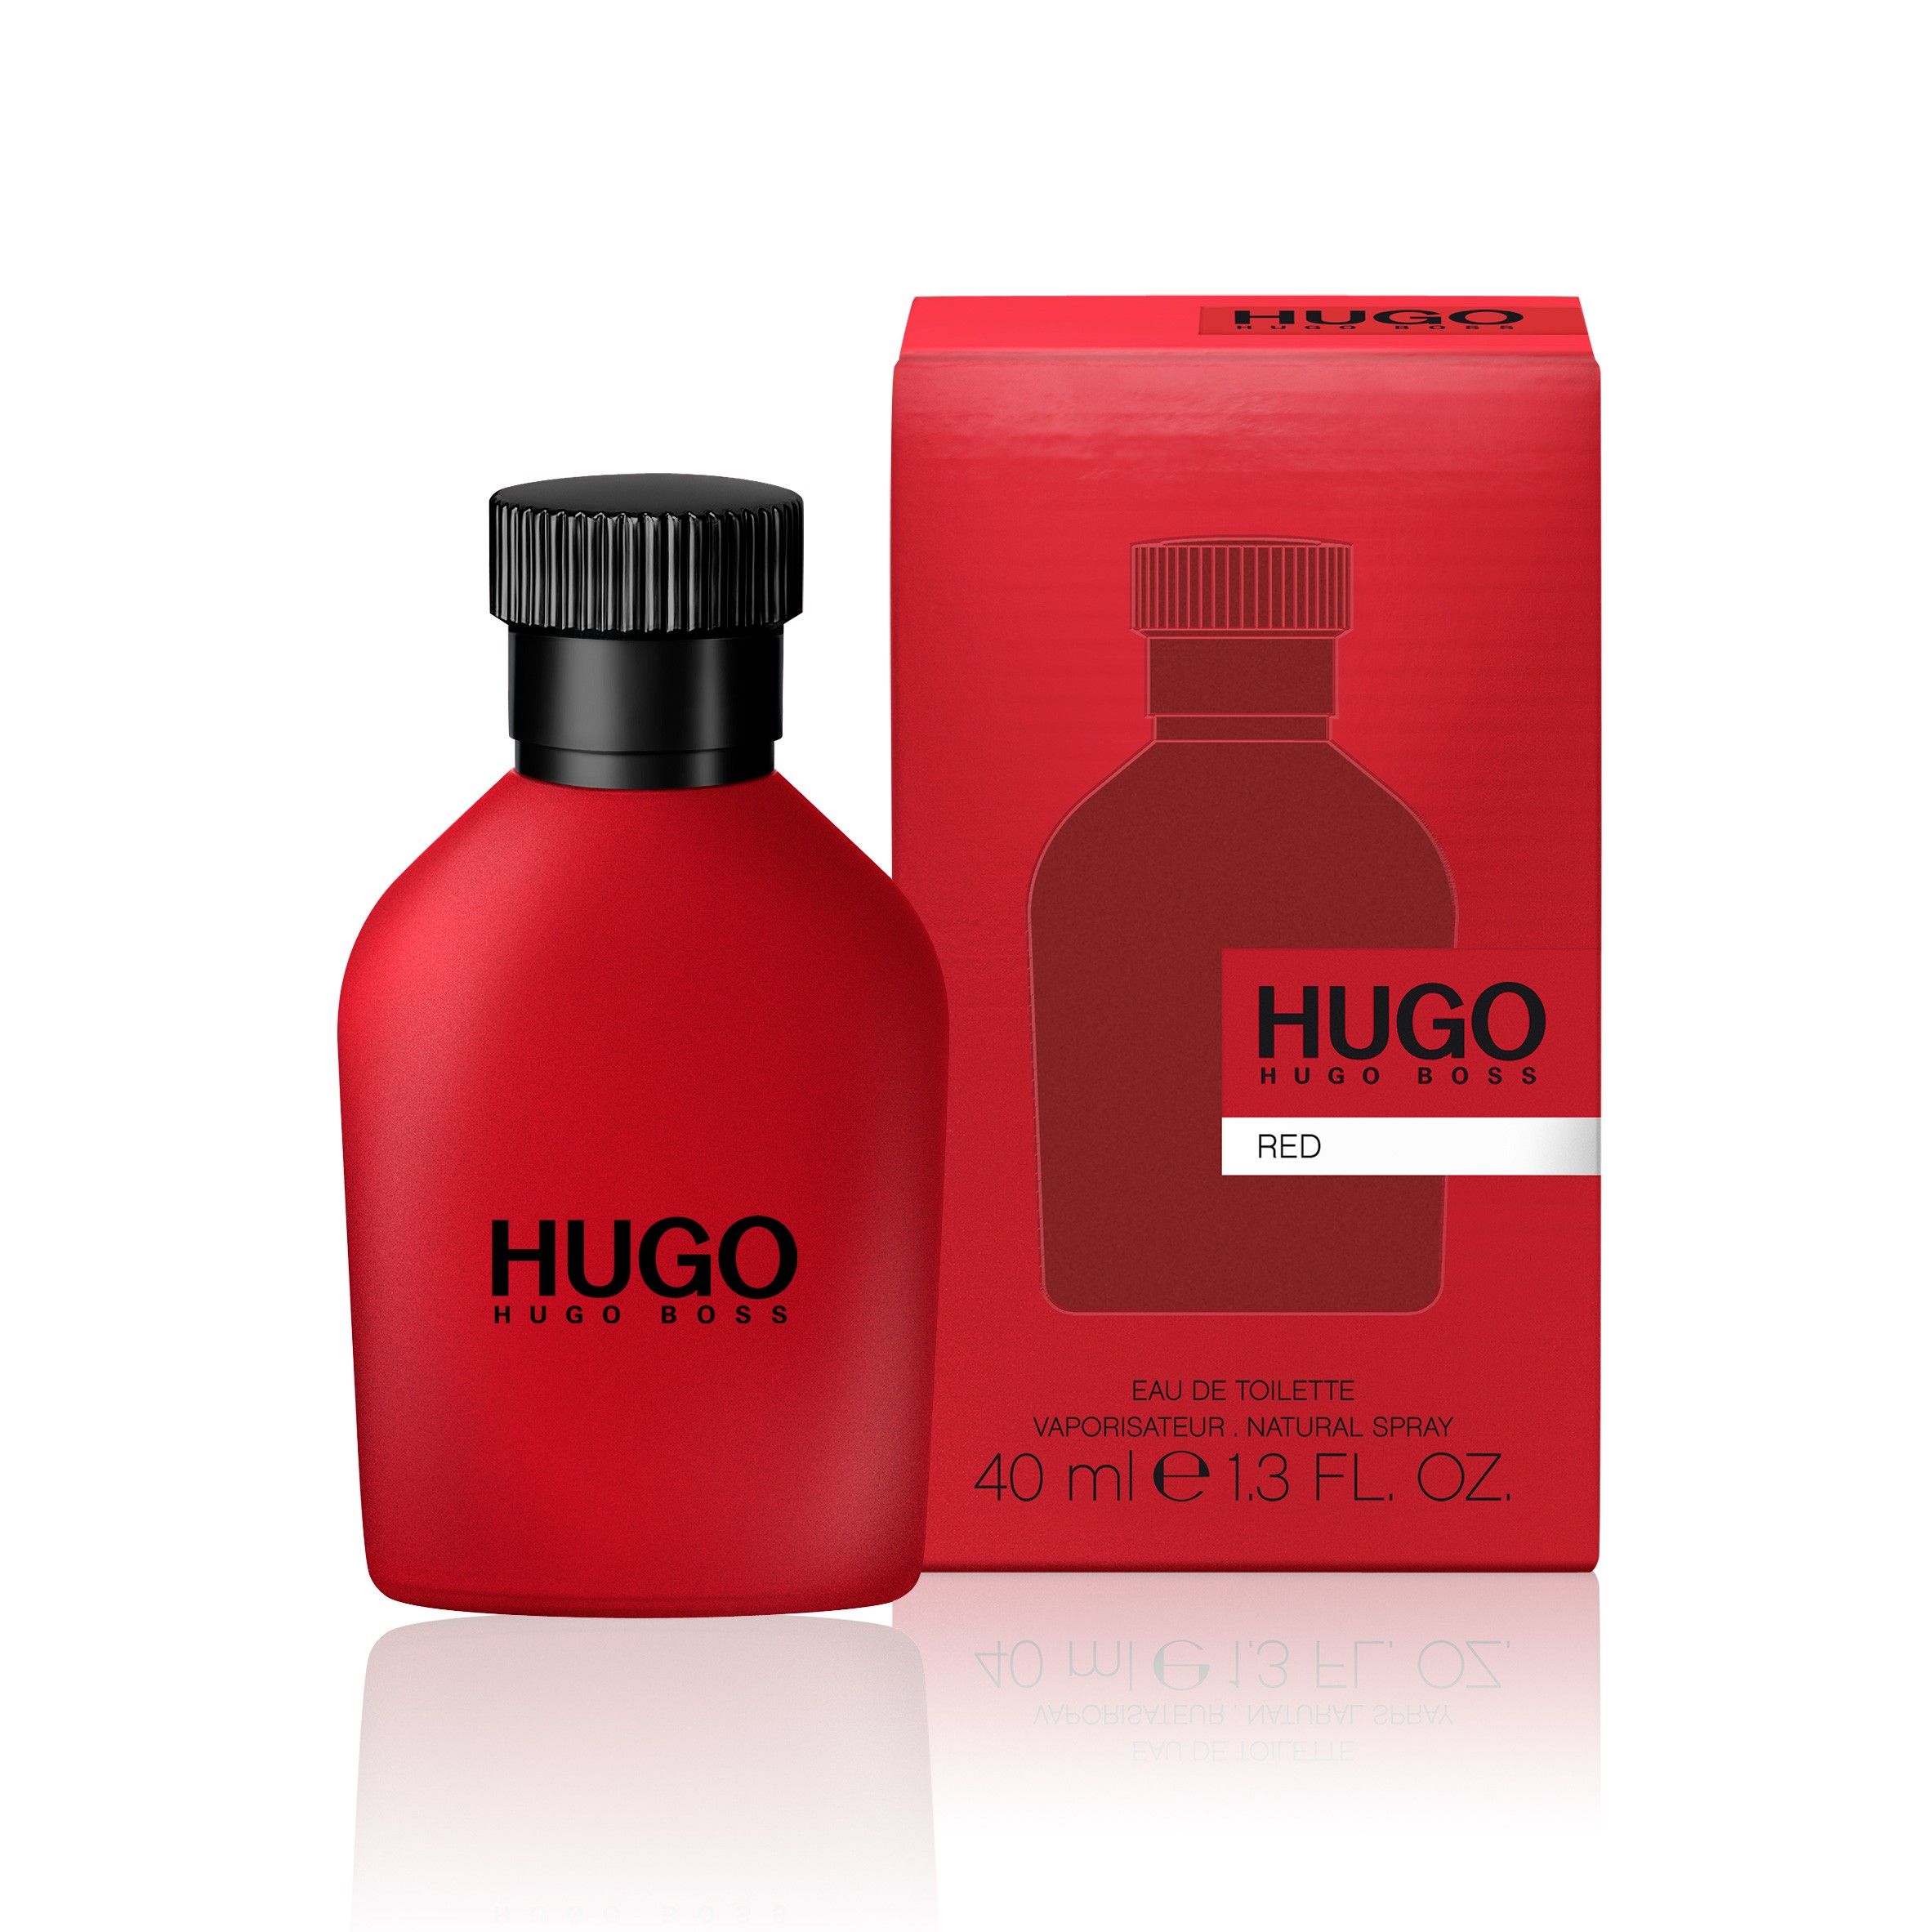 Туалетная вода хуго босс цена. Hugo Boss "Hugo Red" EDT, 100ml. Hugo Boss Red, EDT., 150 ml. Hugo Boss Red EDT Хьюго босс ред туалетная вода 150 ml. Hugo Boss мужской Hugo туалетная вода (EDT) 40мл.